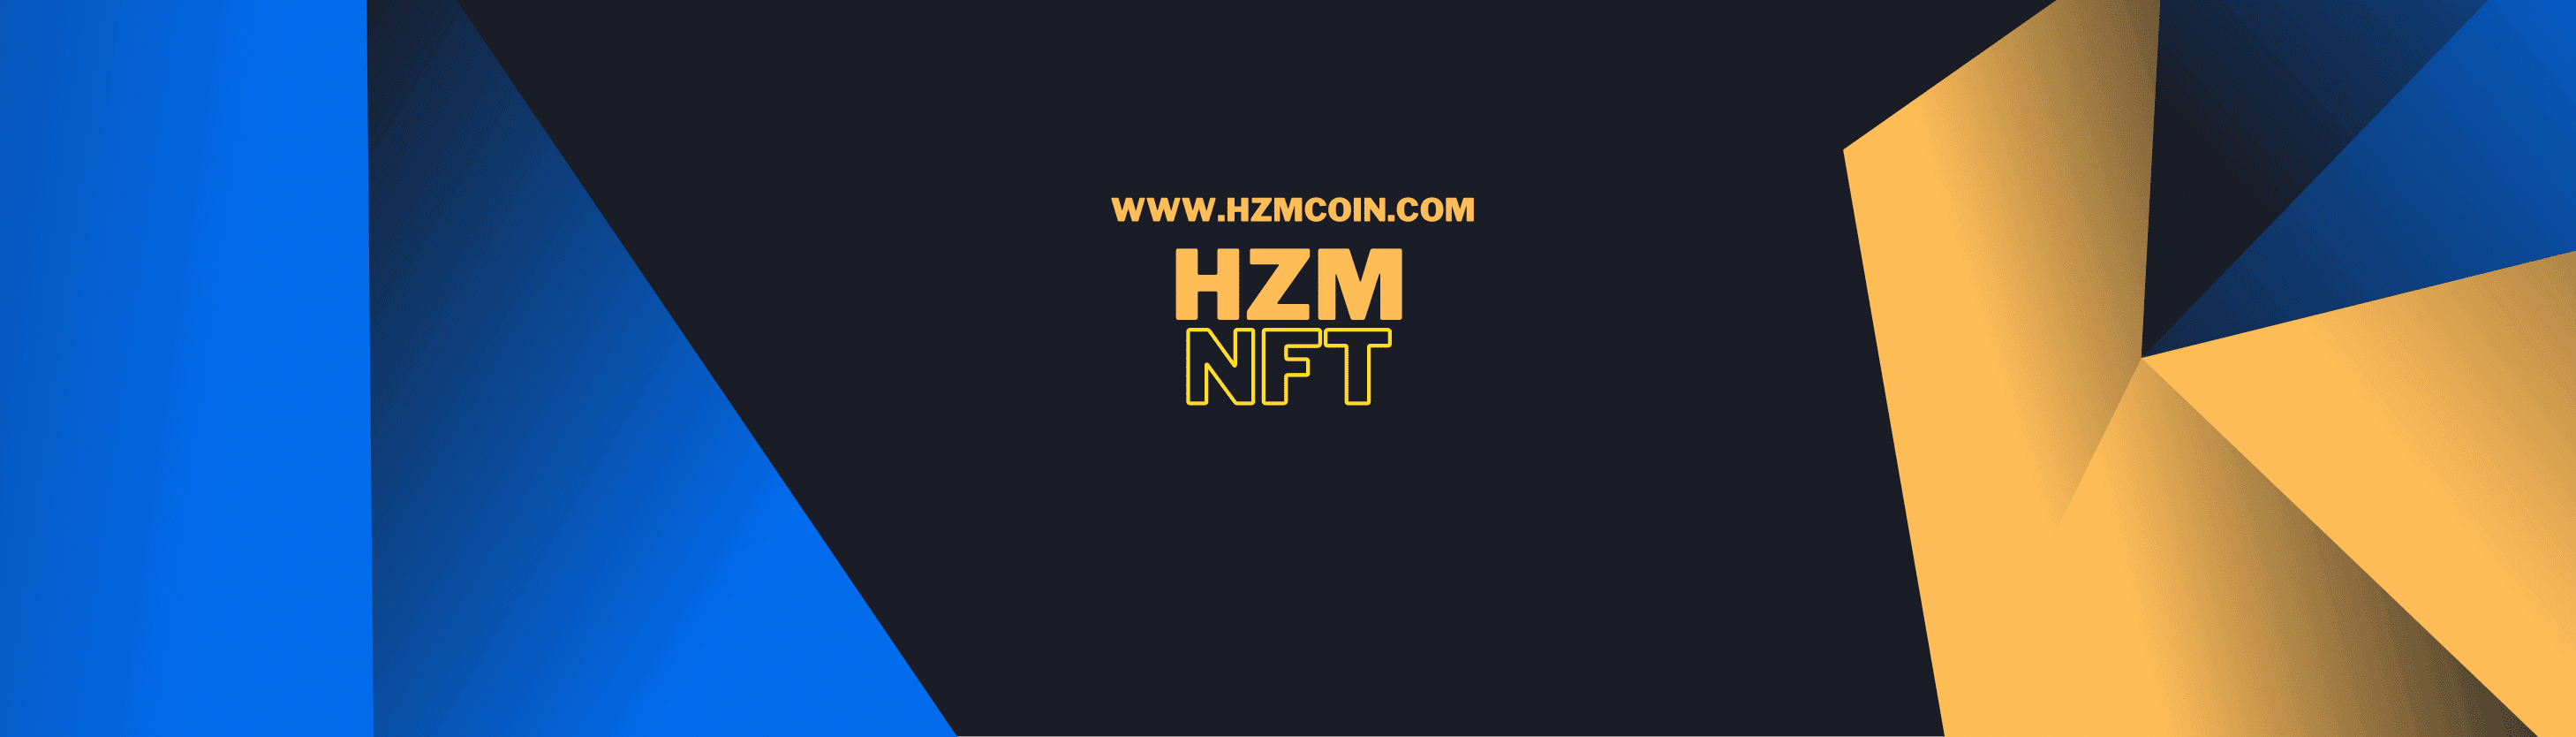 HZM_NFT 横幅